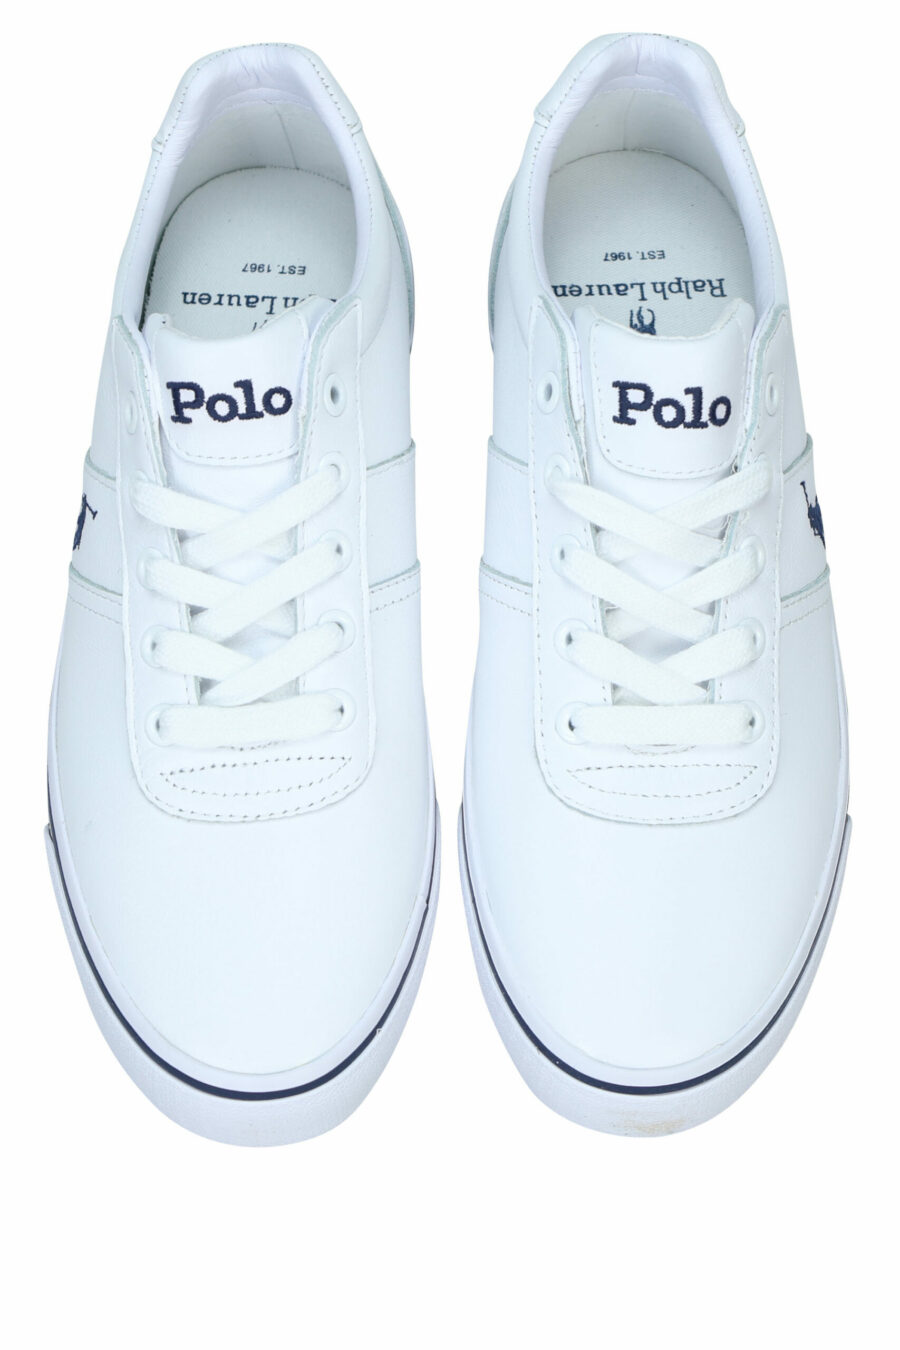 Zapatillas blancas con detalles azules y logo "polo" - 3615737560351 4 scaled